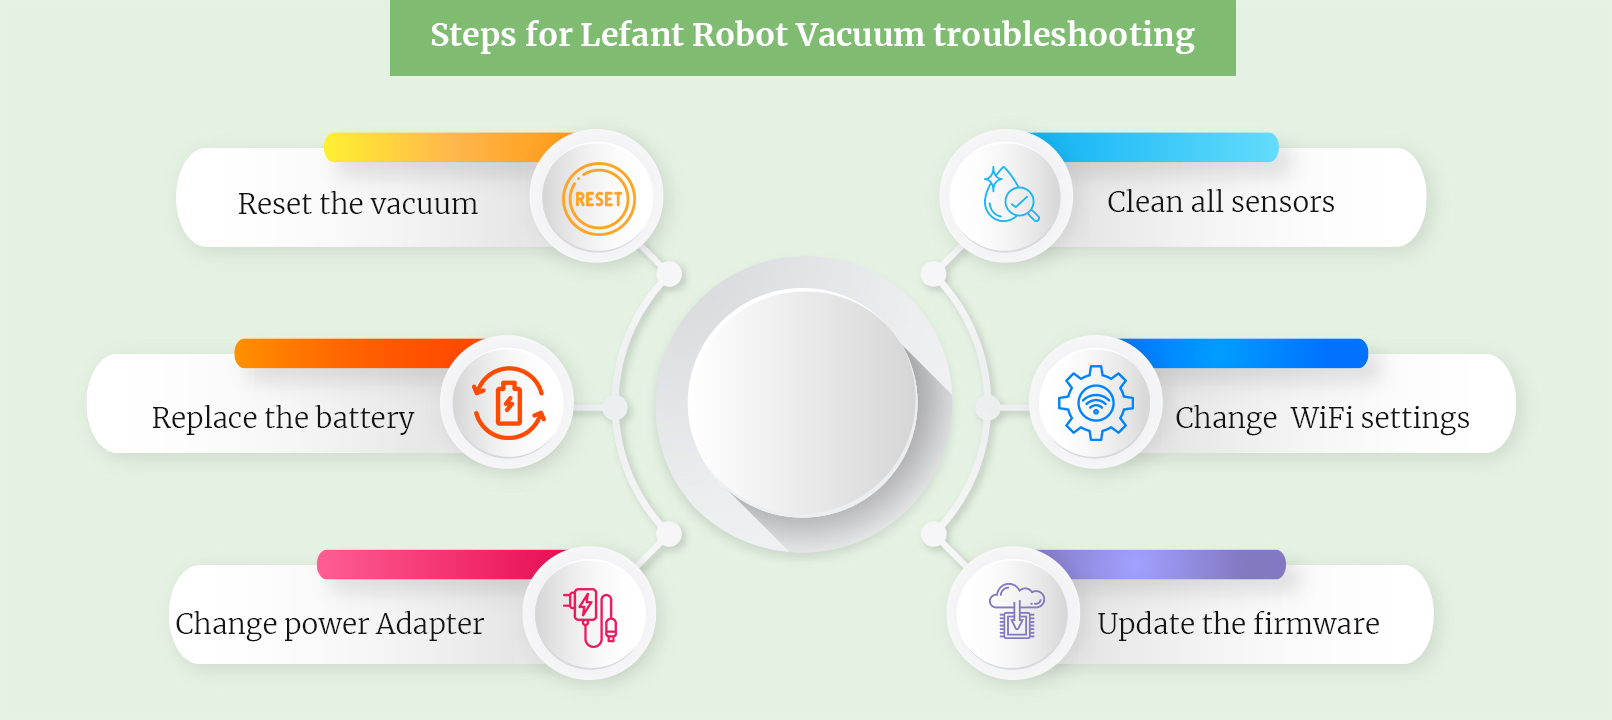 PPT - Lefant Robot Vacuum Not Charging - 7 Steps To Fix It